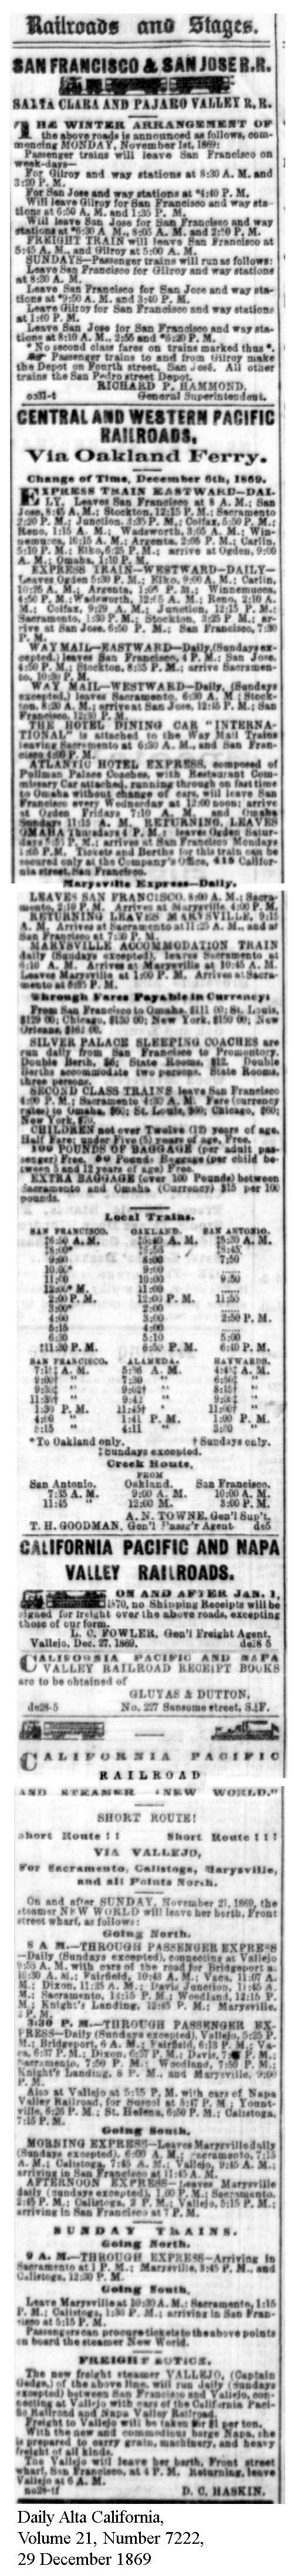 1869-12-29 CP, SF&SJ, CalP Timetables; still Promontory - Daily Alta California, Volume 21, Number 7222, 29 December 1869